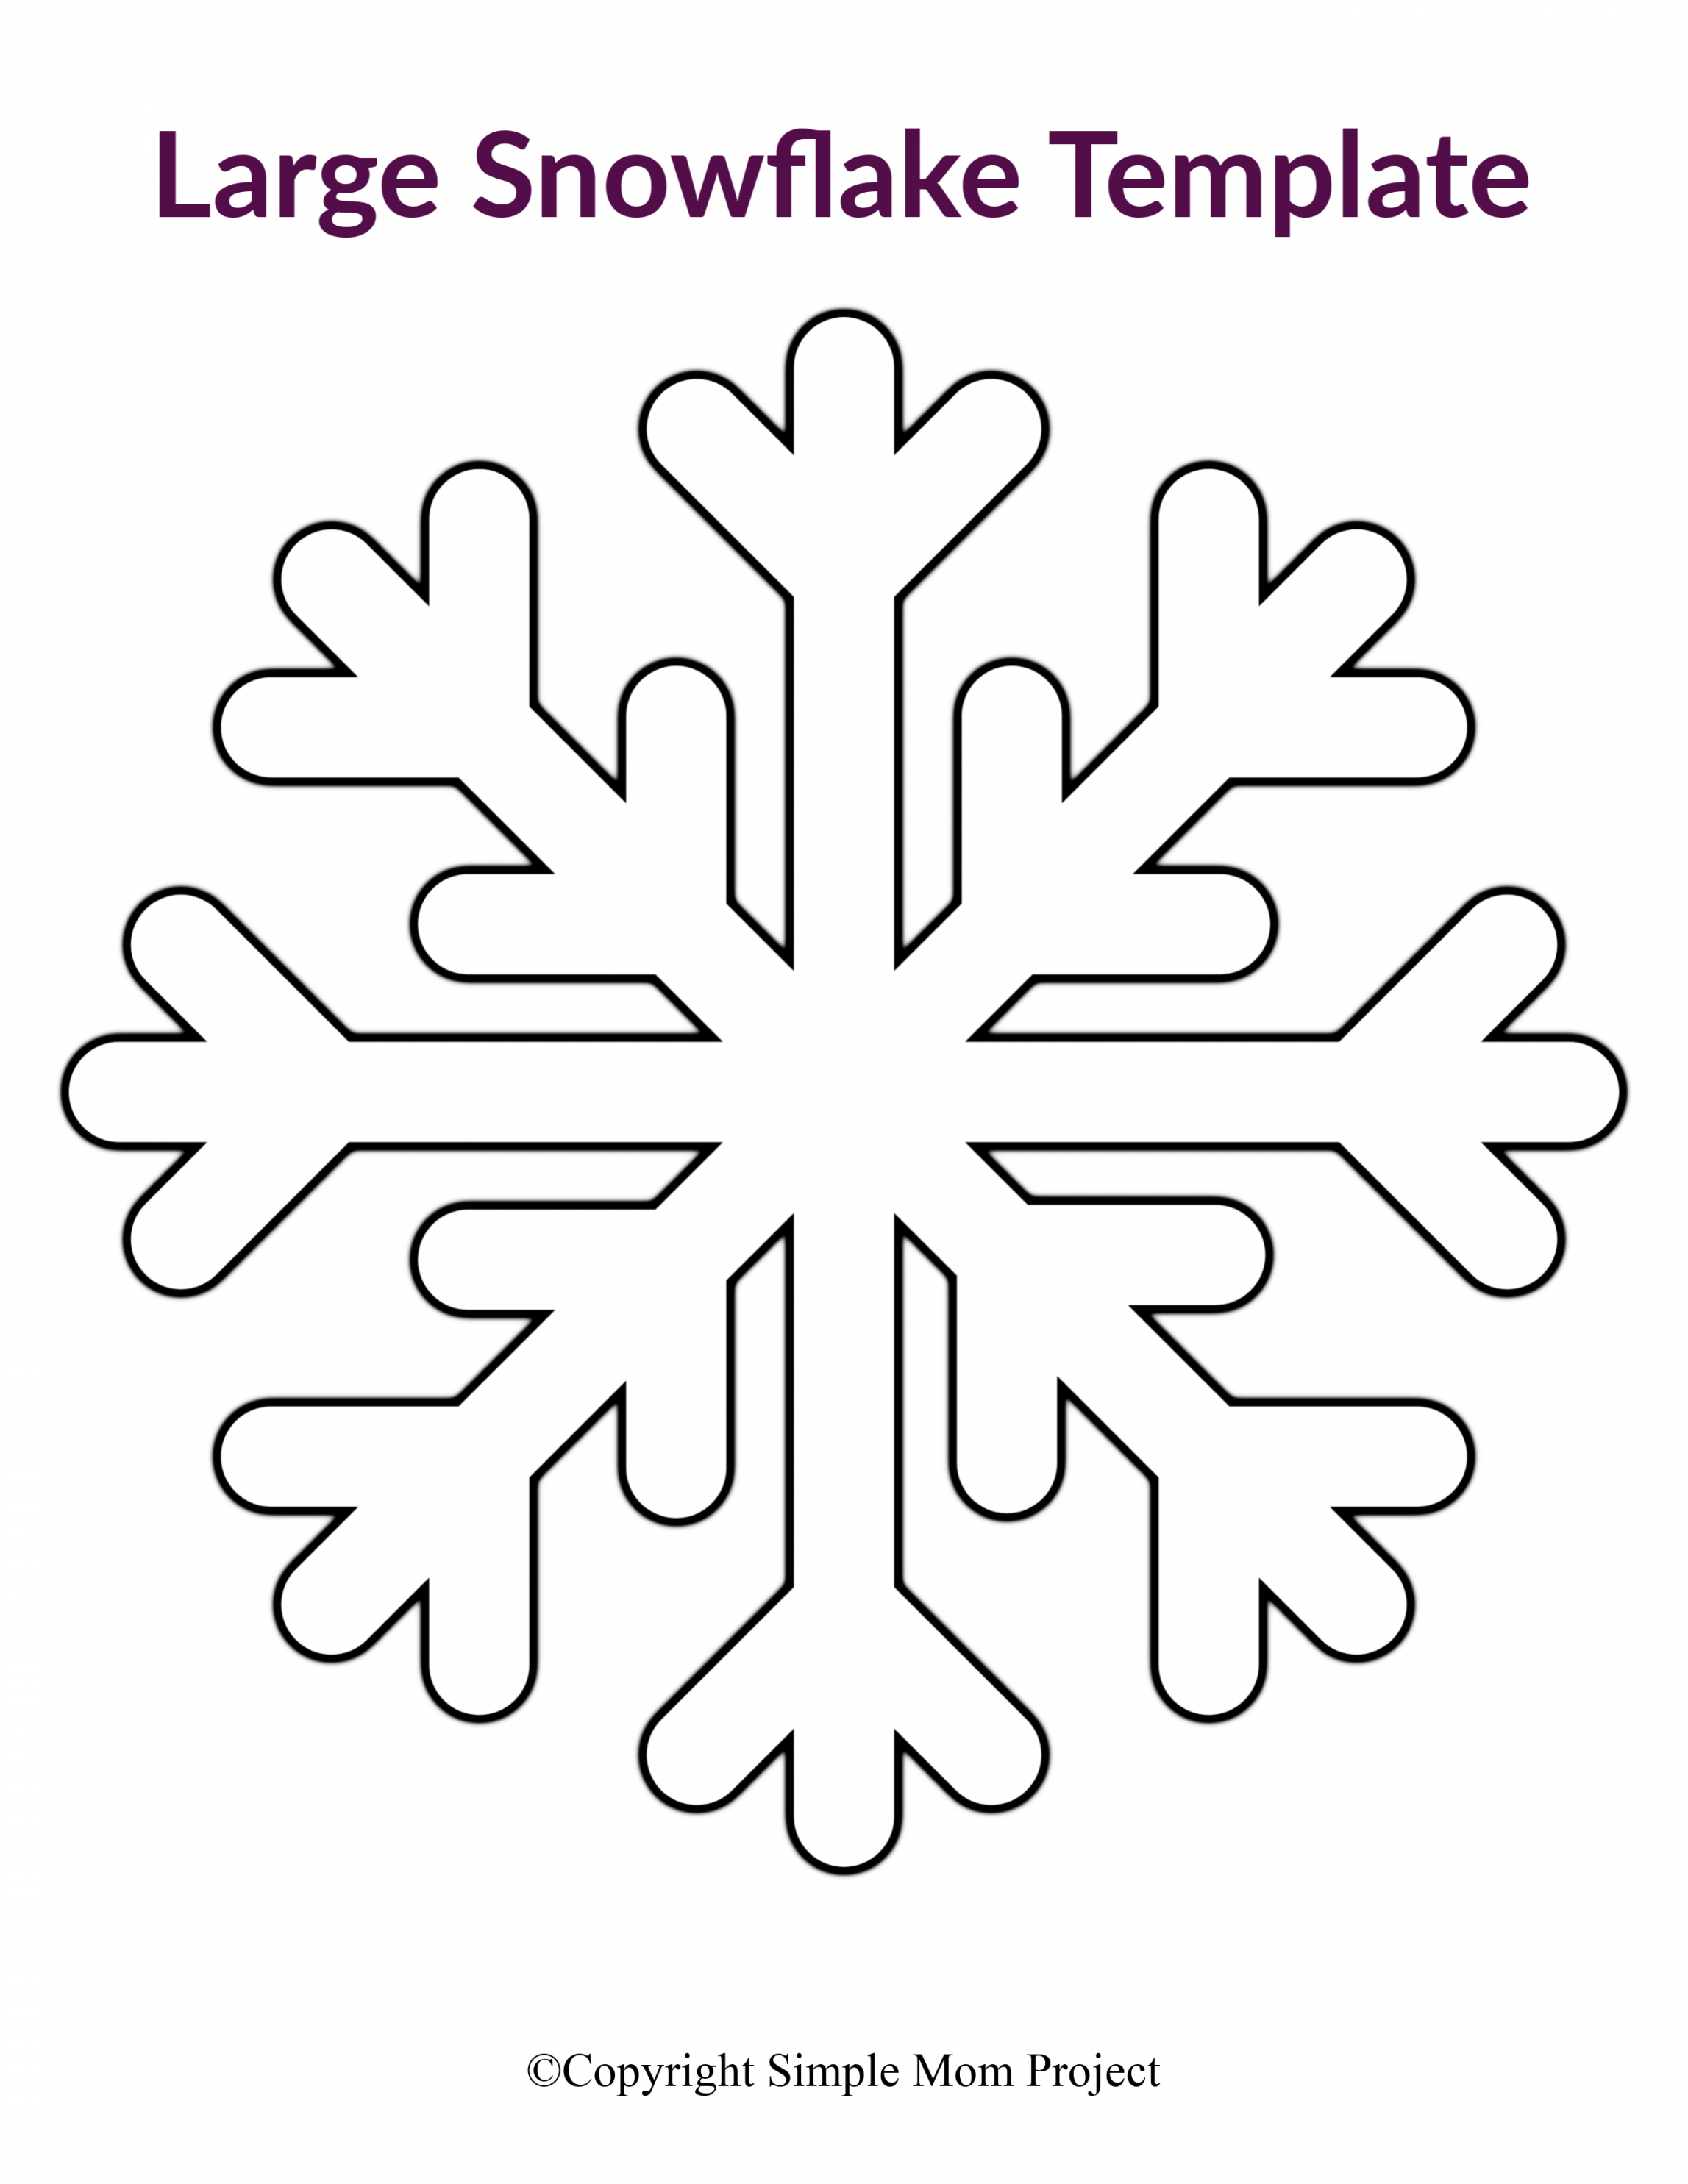 Free Printable Large Snowflake Templates - Simple Mom Project - FREE Printables - Snowflakes Printable Free